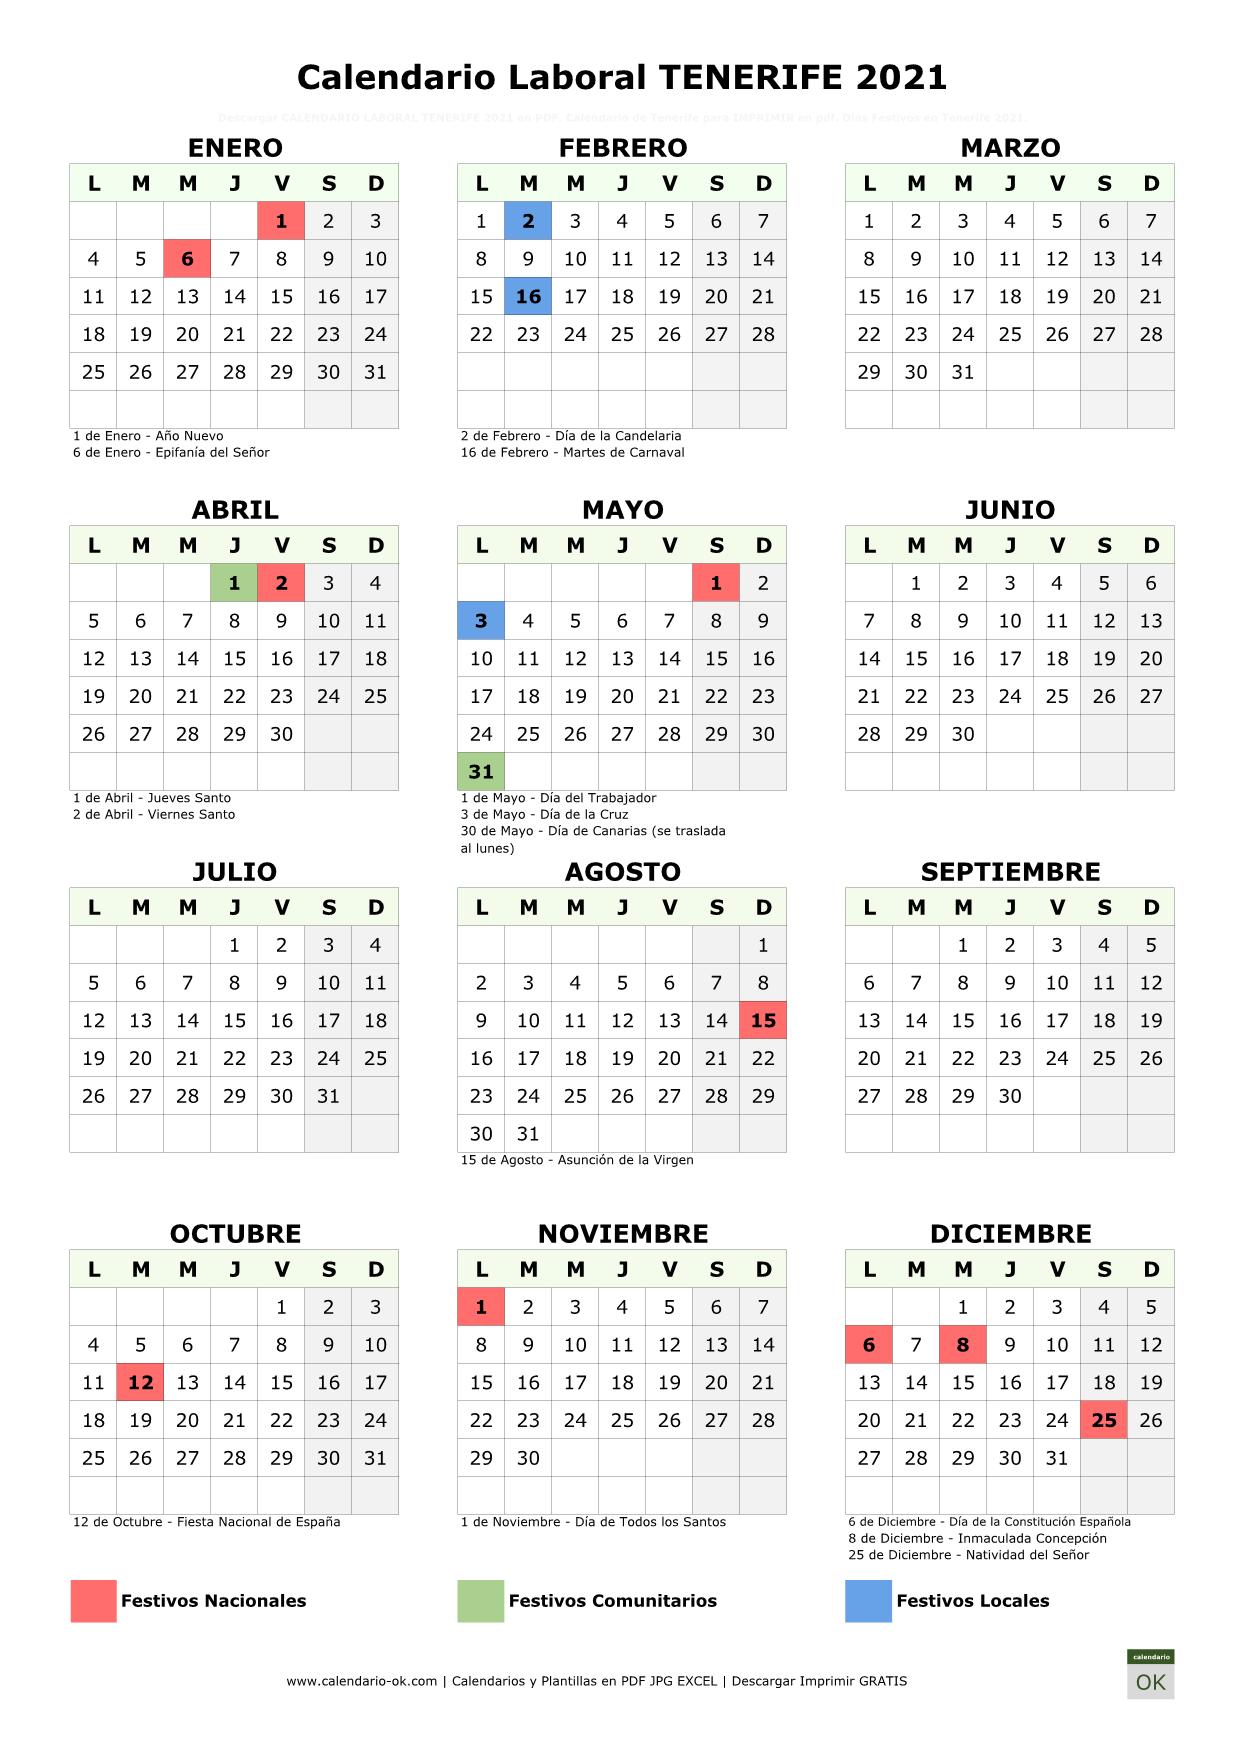 Calendario Laboral Tenerife 2021 vertical